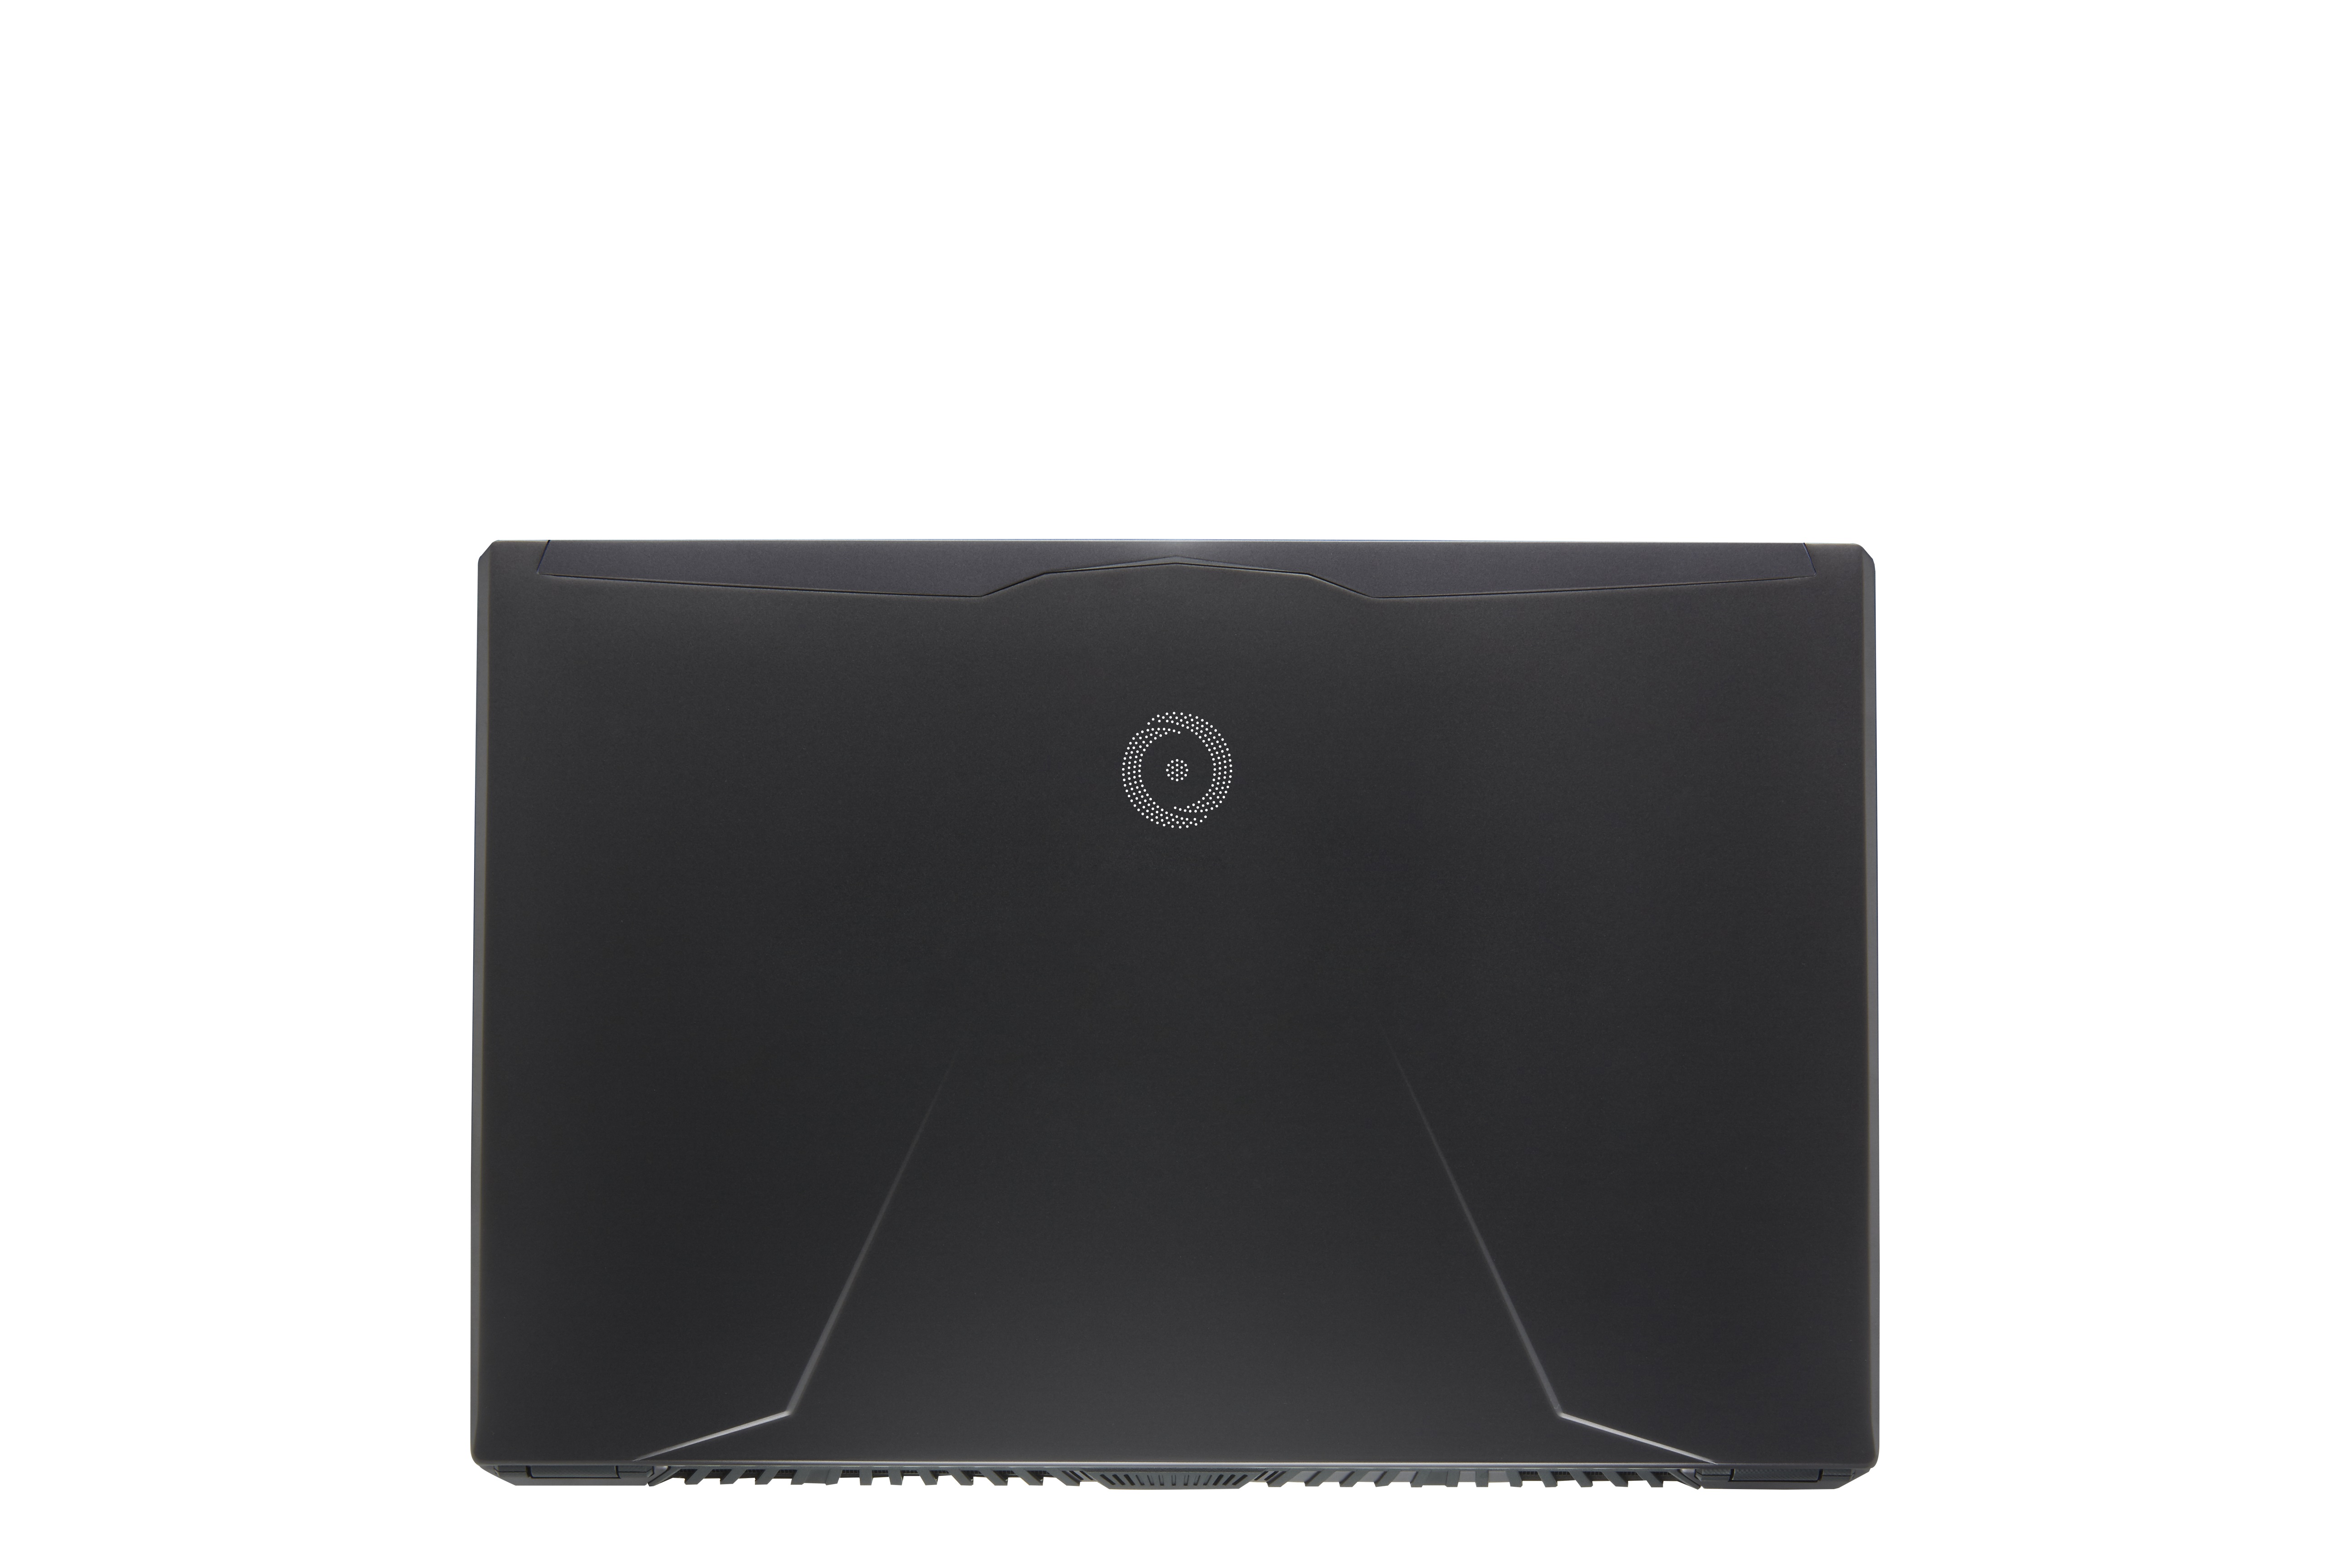 Meet the ORIGIN PC thin and light EVO15-S laptop powered by Windows 10